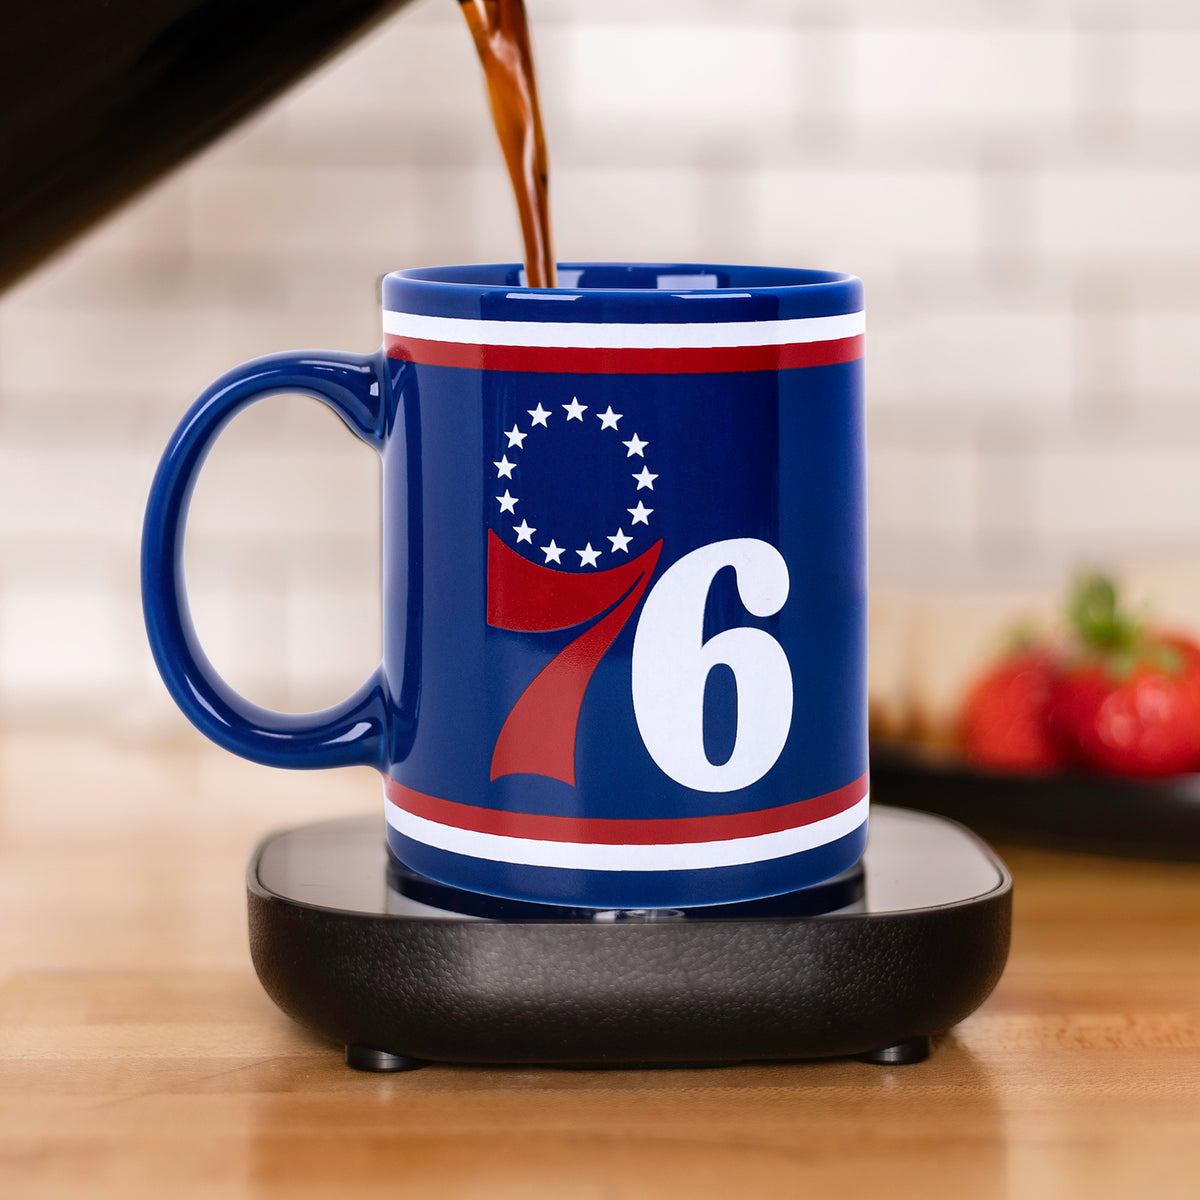  Uncanny Brands NBA Milwaukee Bucks Logo Mug Warmer with Mug –  Keeps Your Favorite Beverage Warm - Auto Shut On/Off: Home & Kitchen